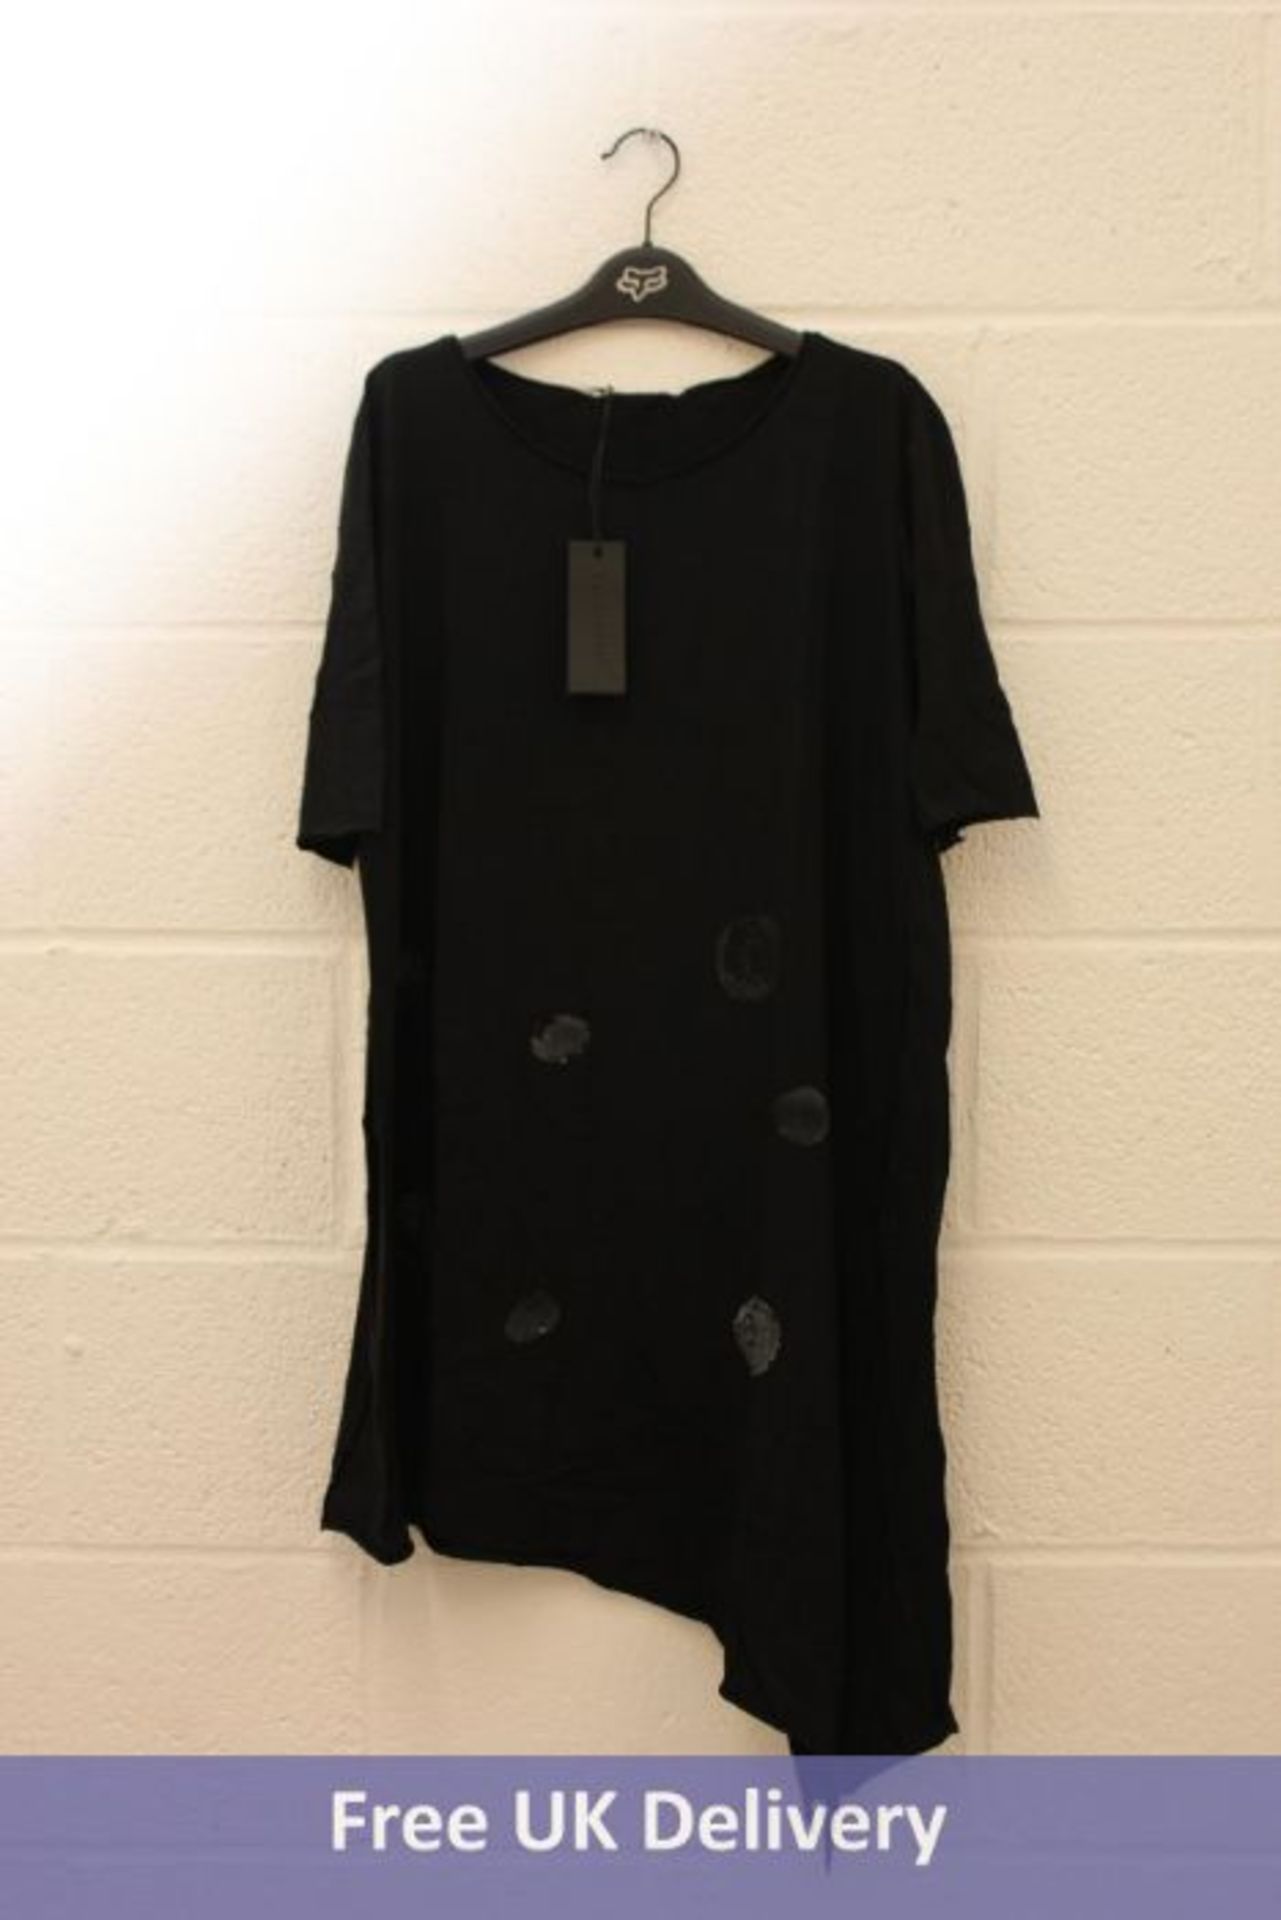 Kedziorek Women's Dress, Black, Size 36